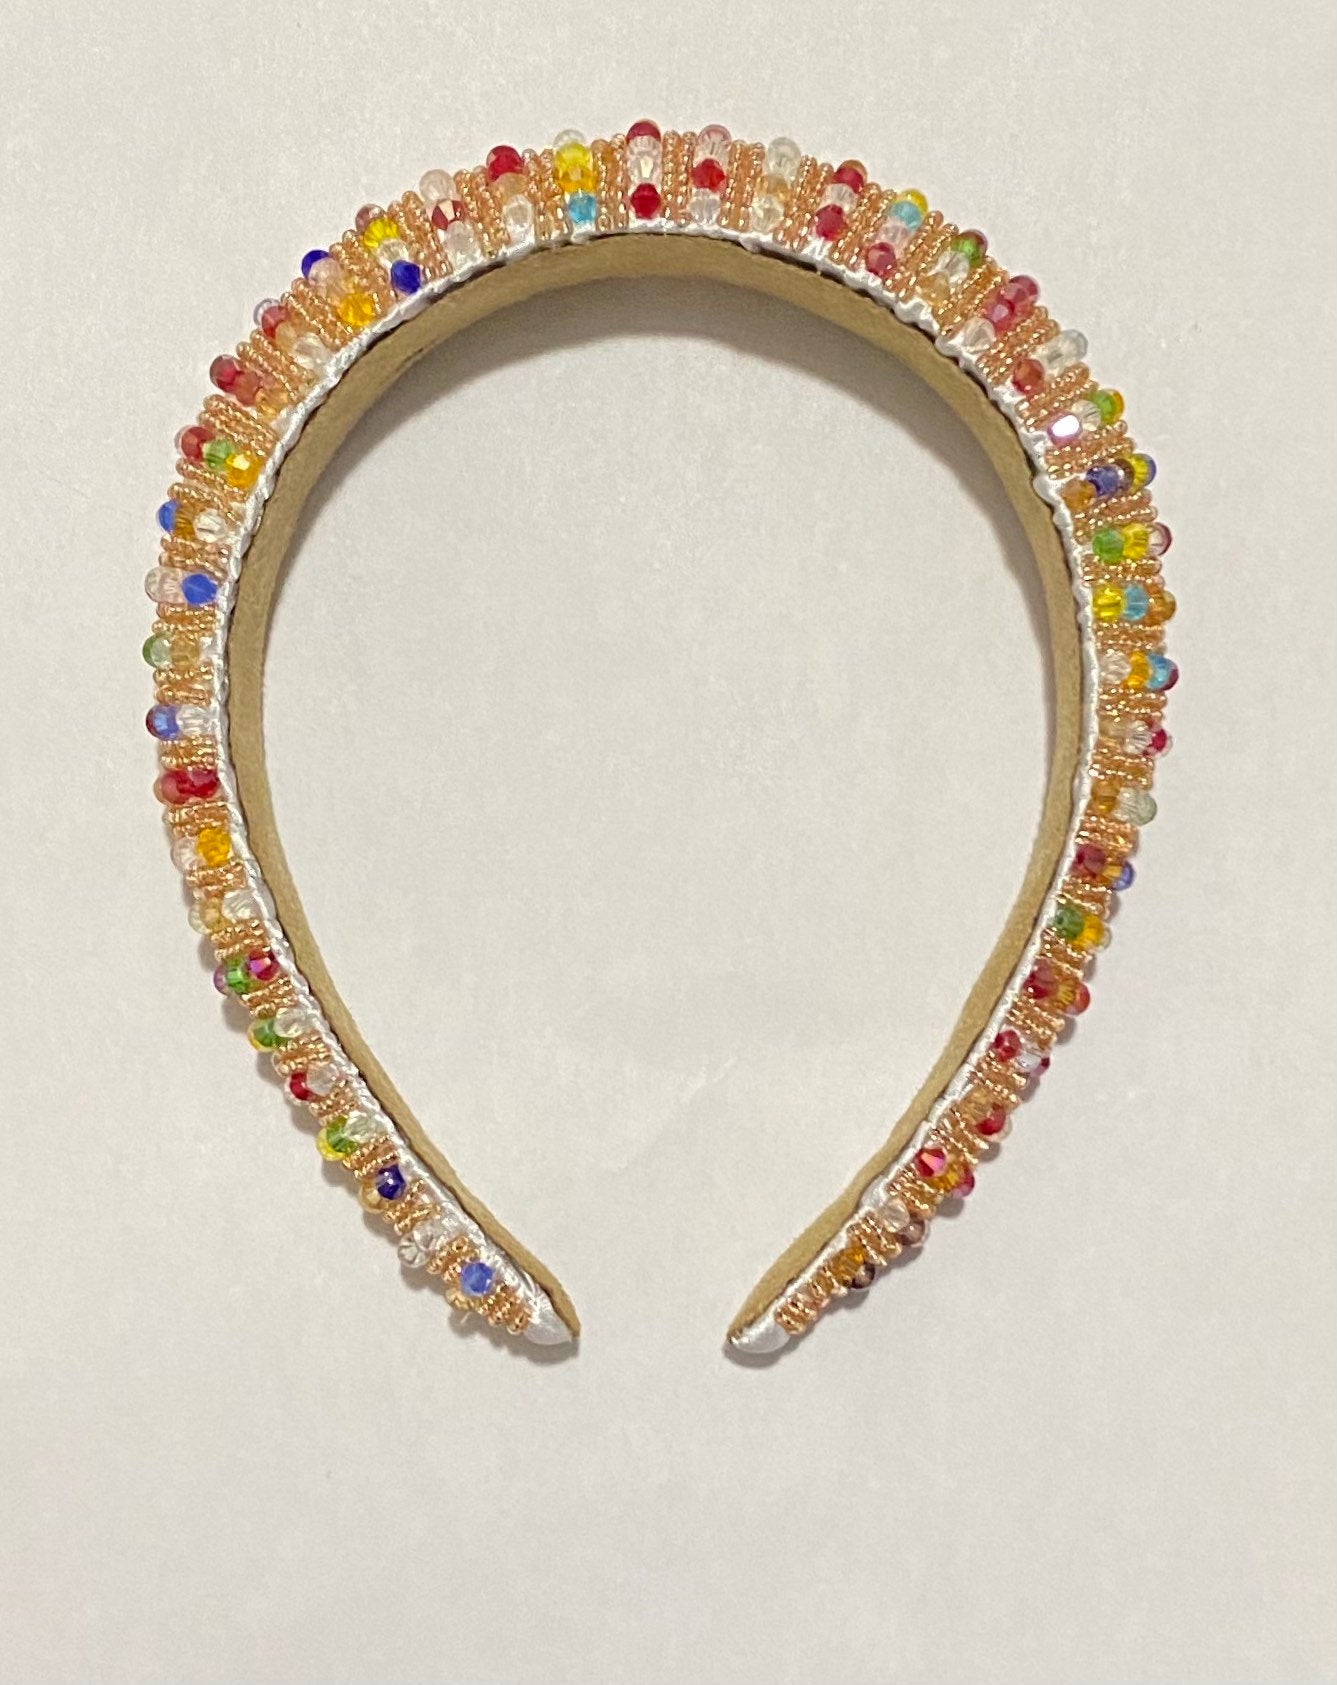 Handmade Multicolored Beaded Hairband Accessories